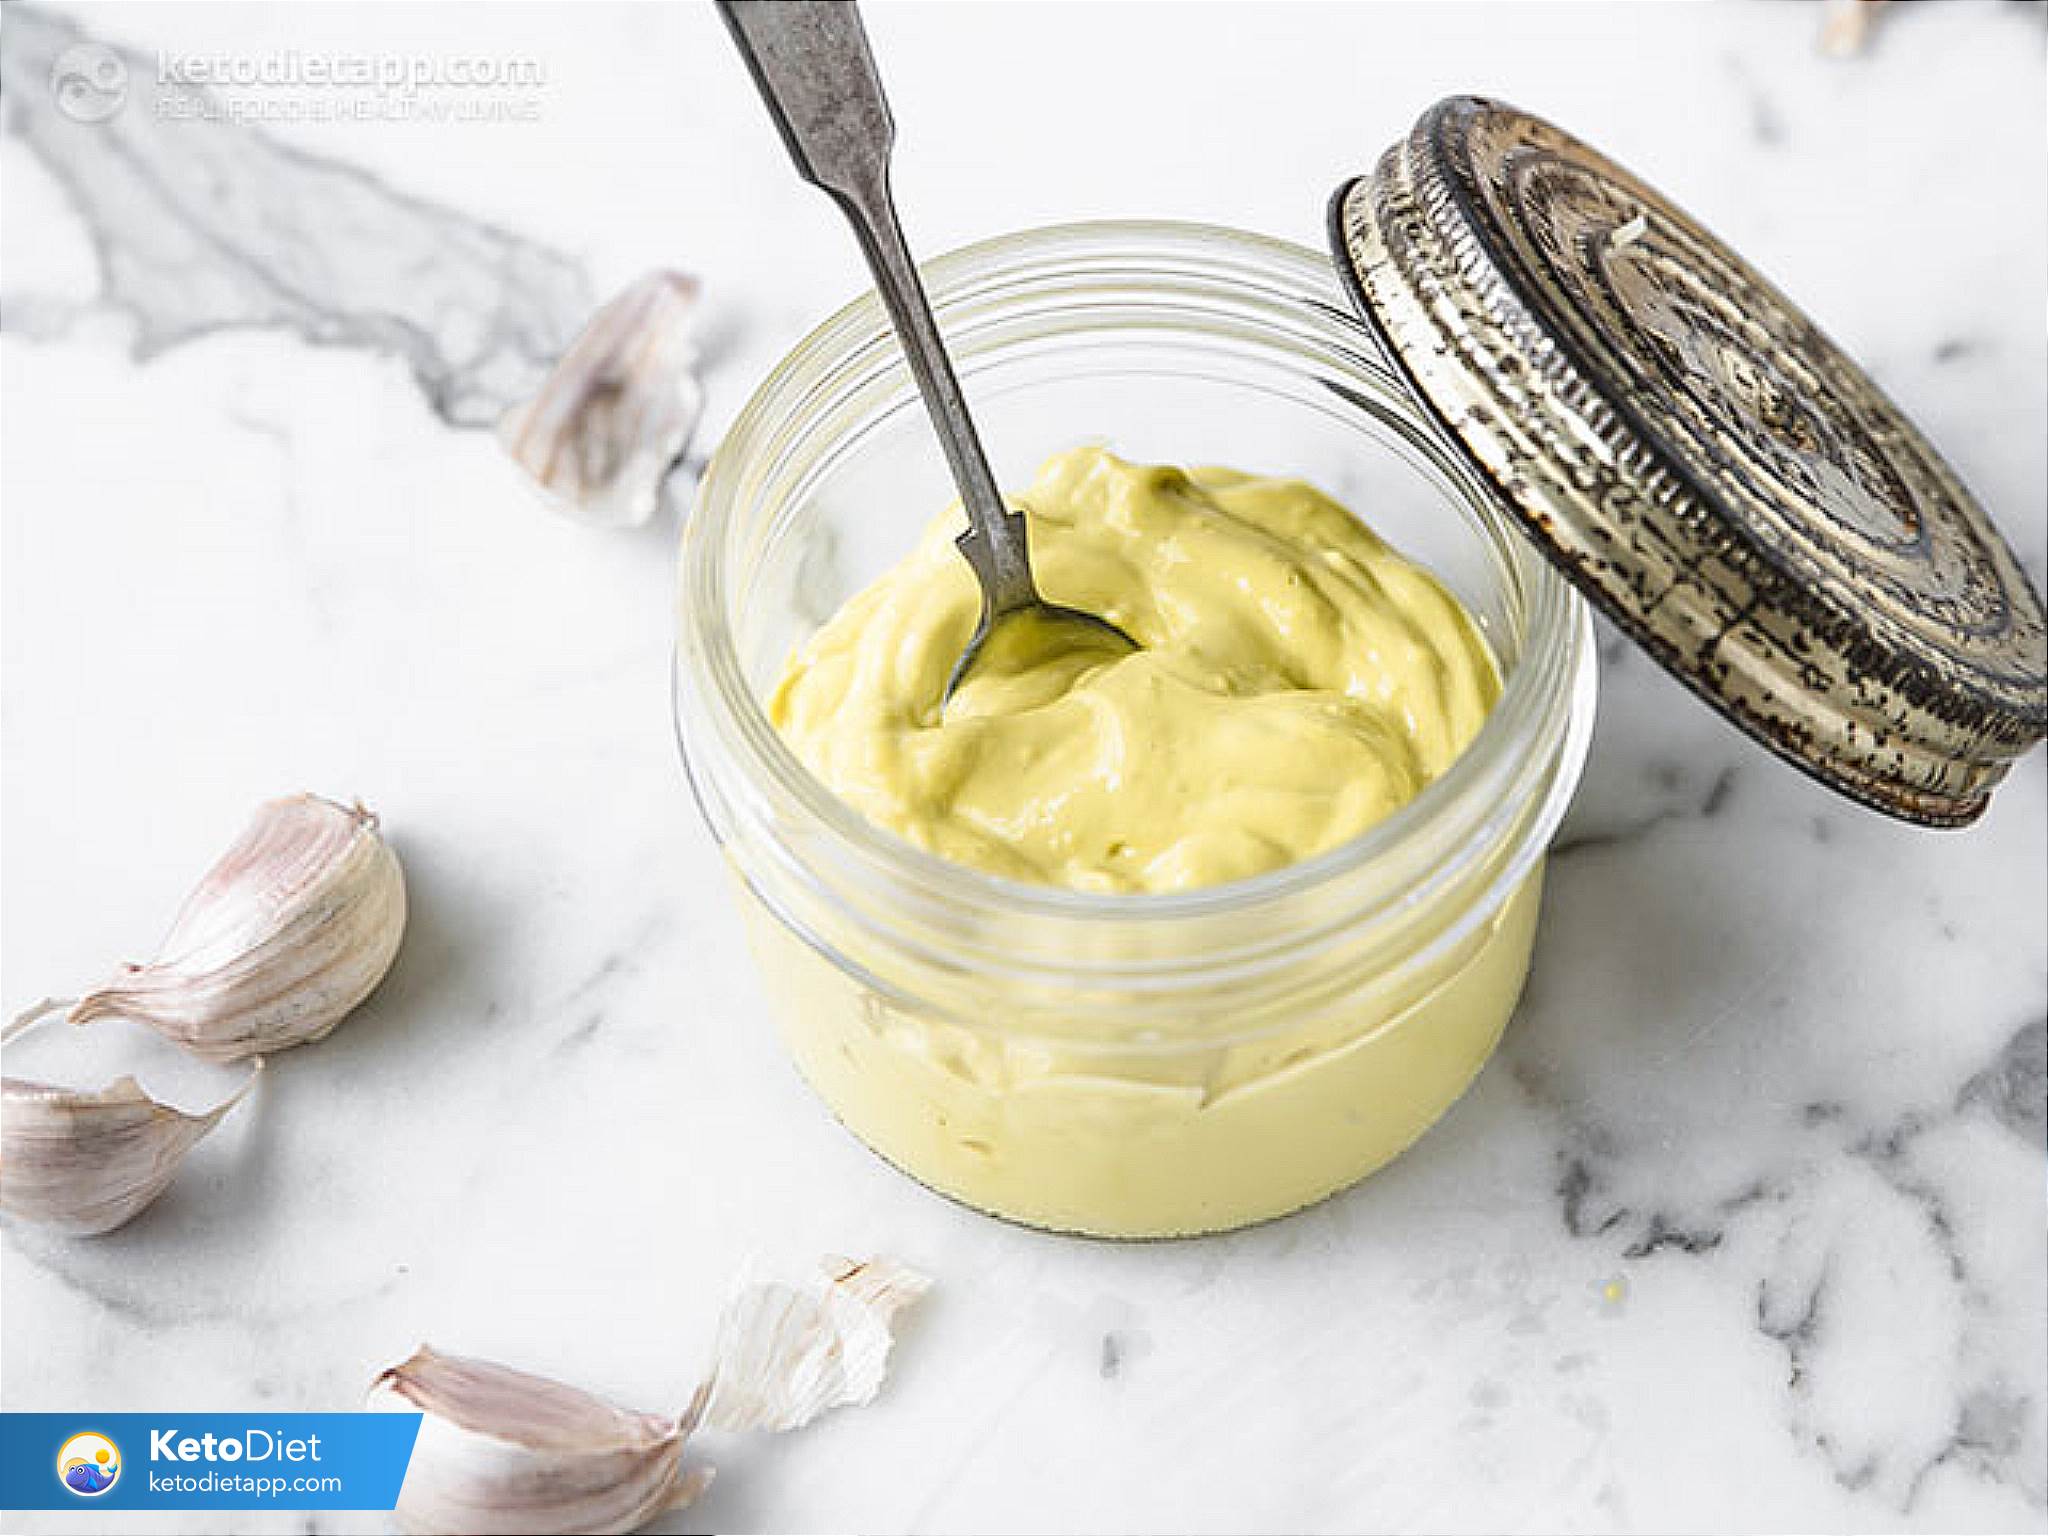 Keto Mayo - Homemade Mayonnaise Recipe - Low Carb Hoser